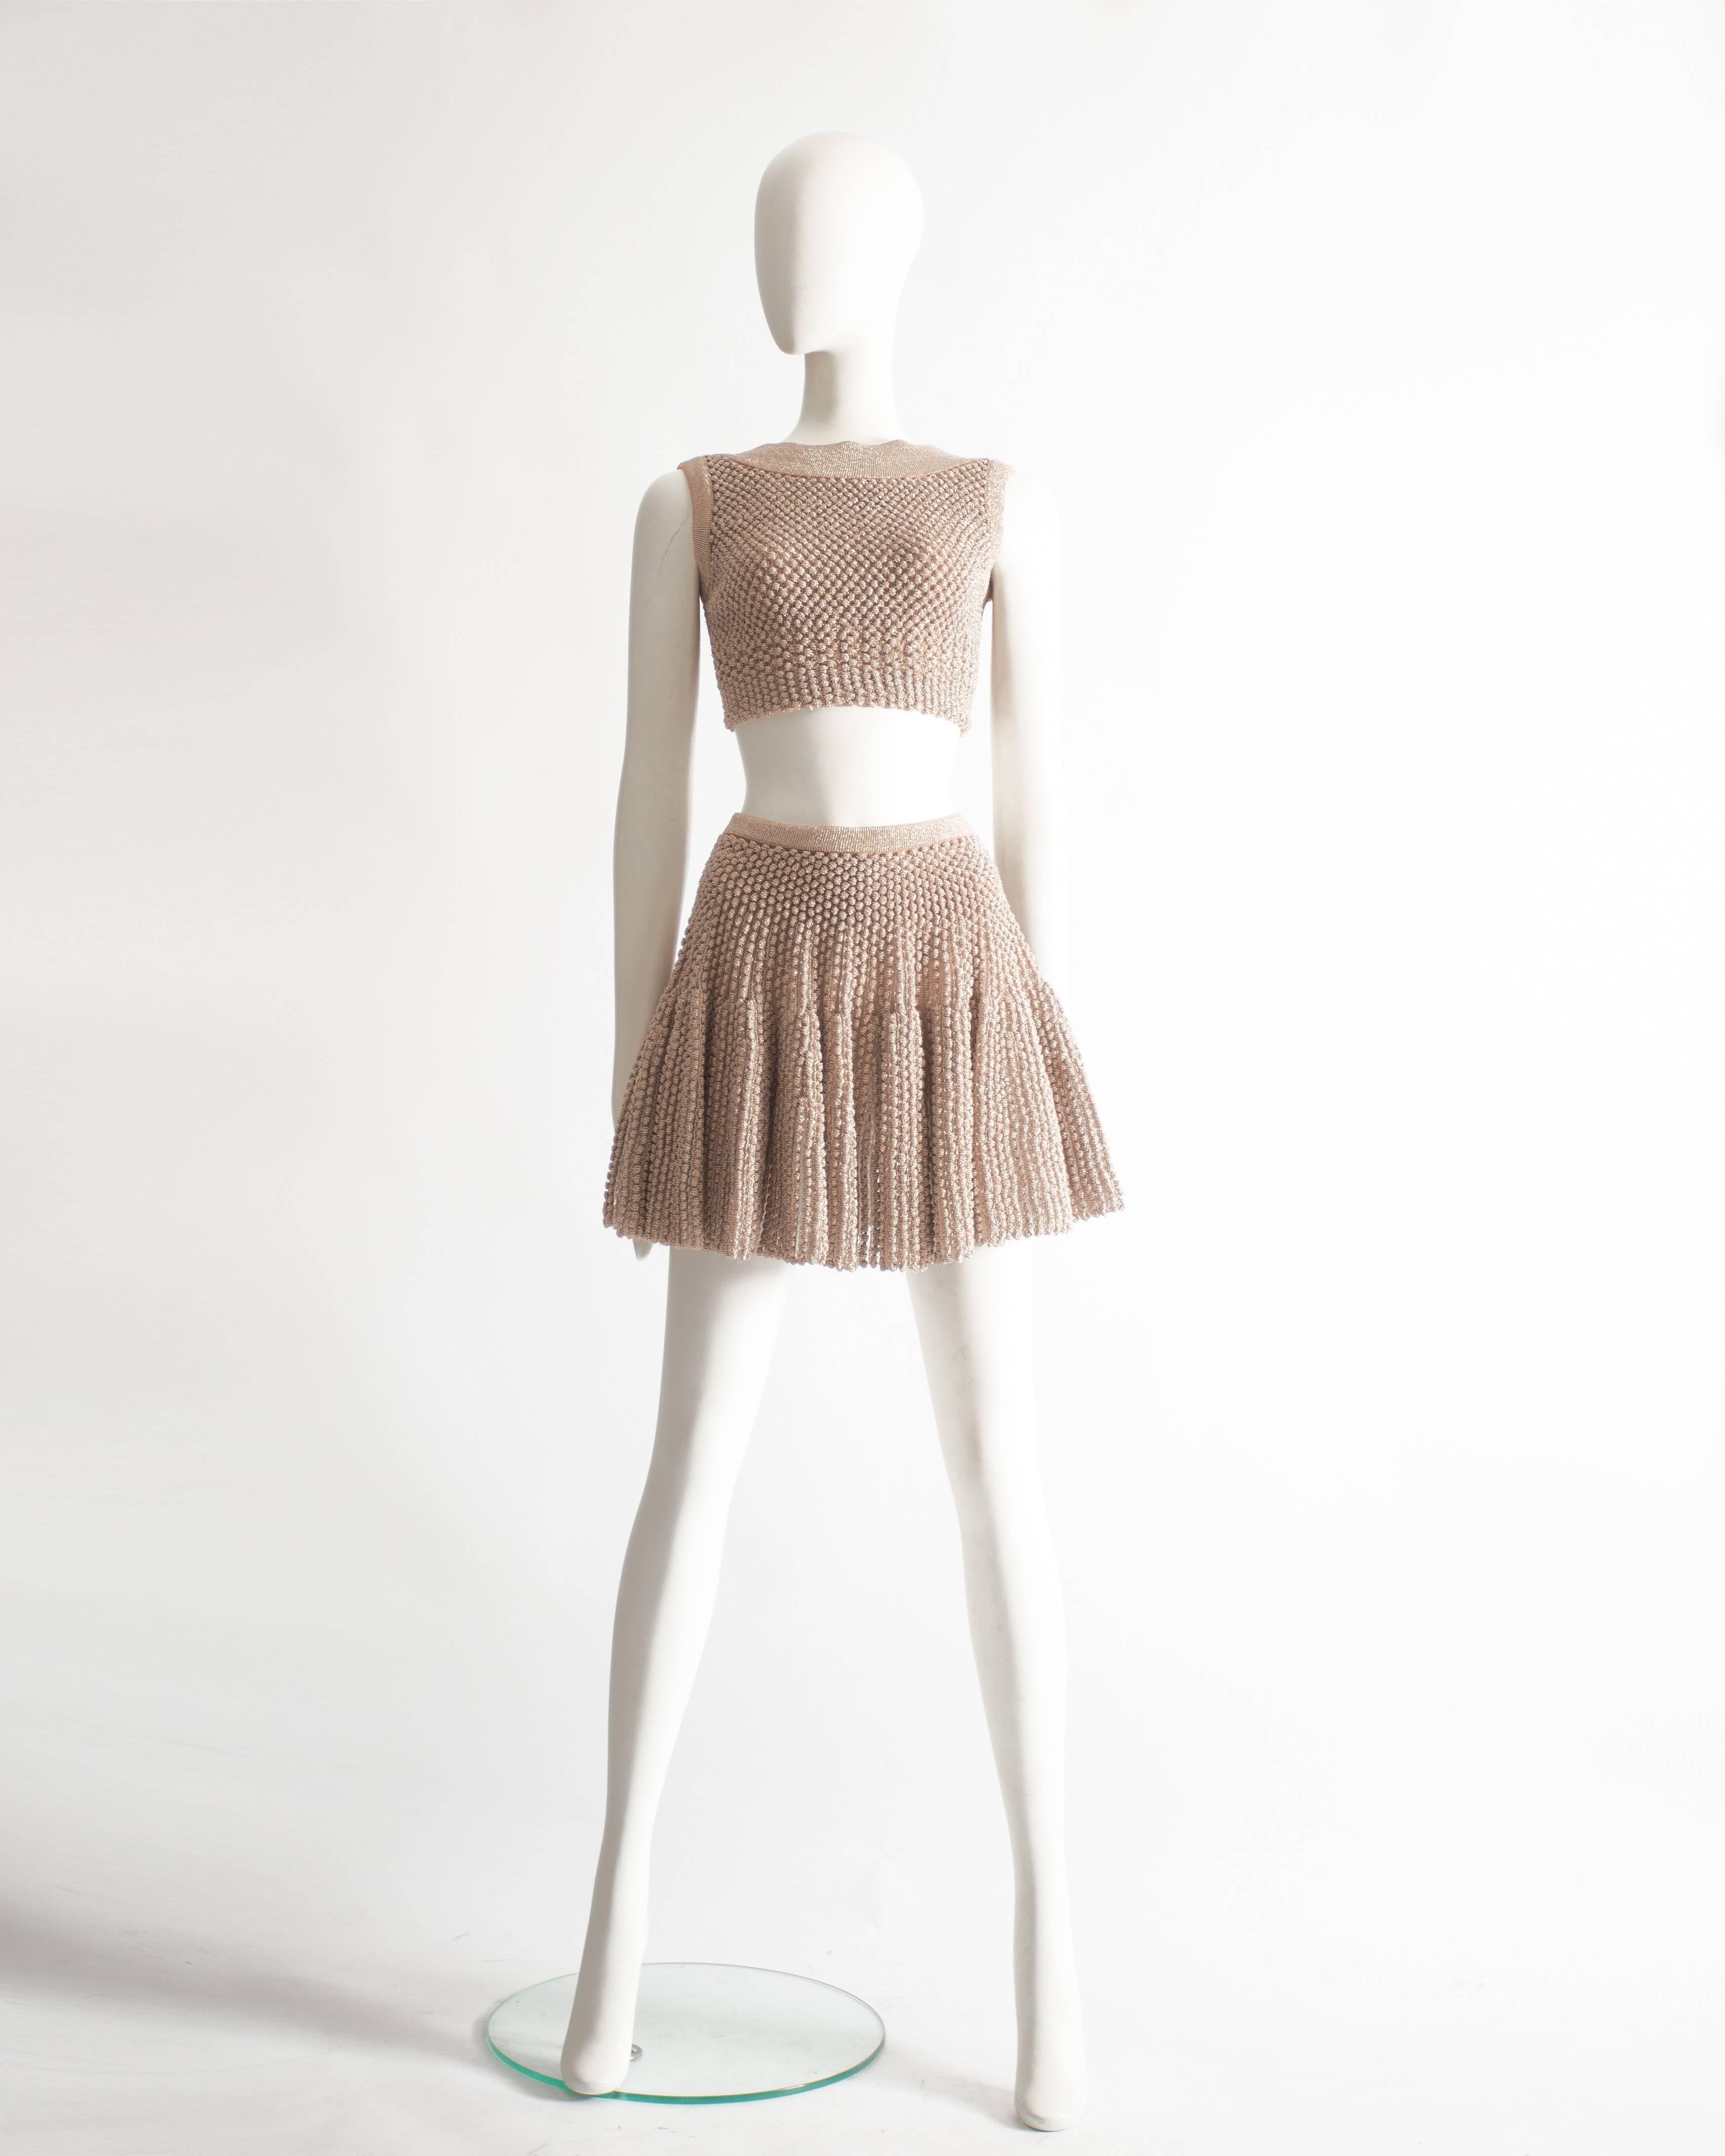 Alaia metallic lurex knit crop top and skater skirt with internal mini shorts. 